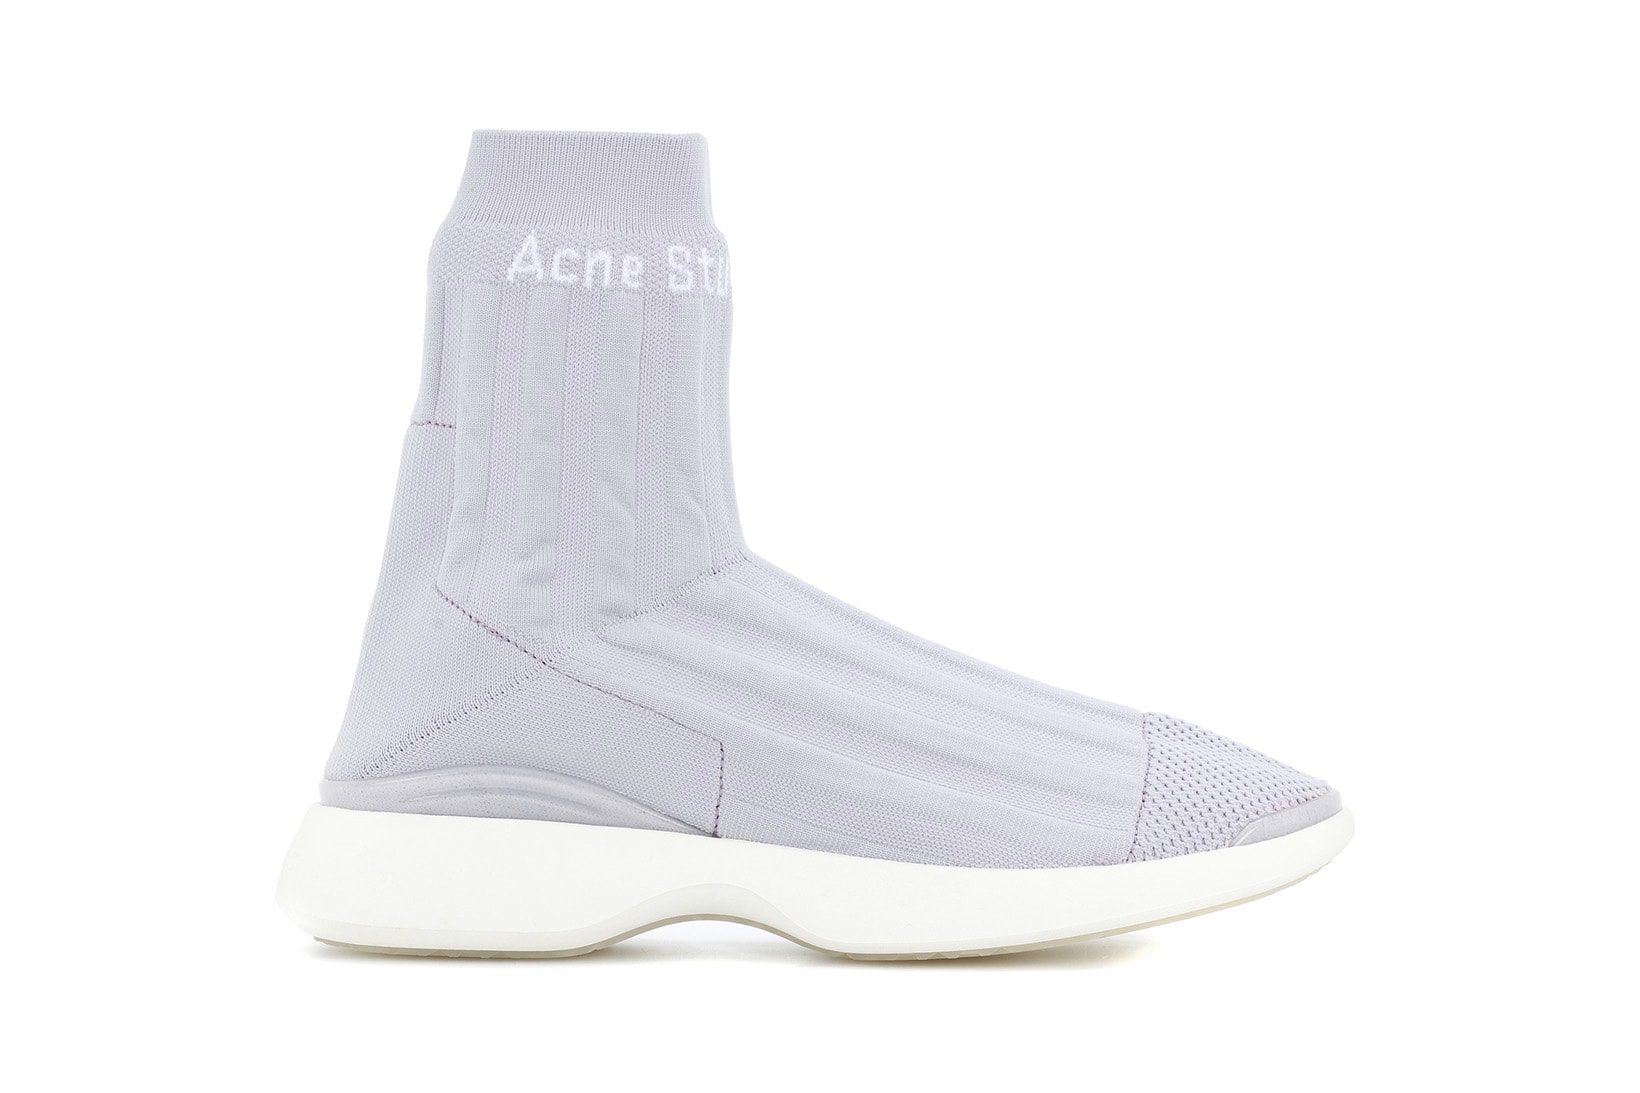 Acne Studios batilda sock sneaker lilac ultra violet light pale purple lavender womens where to buy 2018